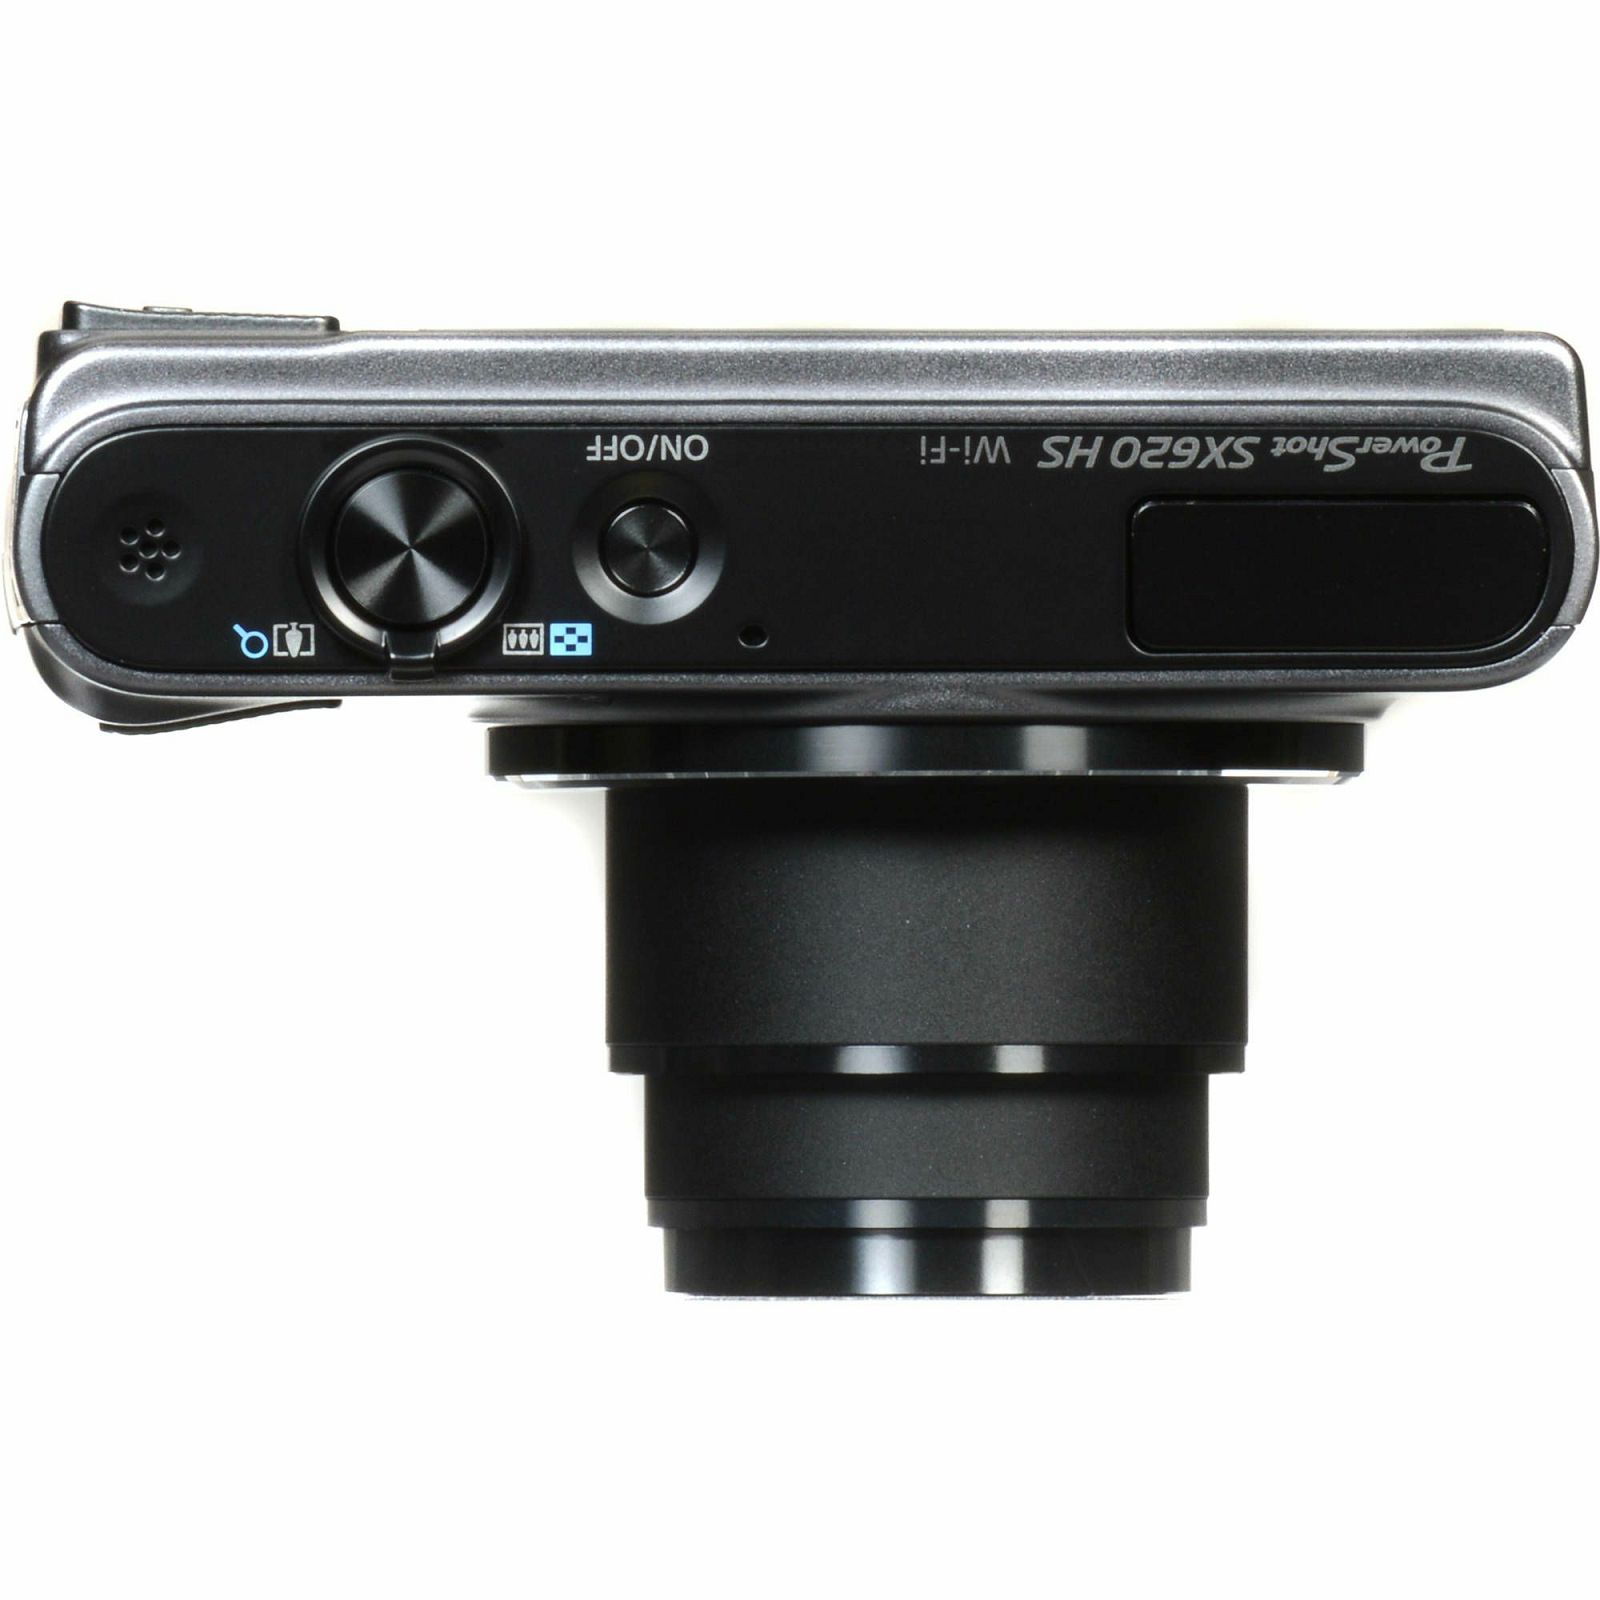 Canon Powershot SX620 HS Essentials KIT Black crni digitalni fotoaparat SX620 HS SX 620